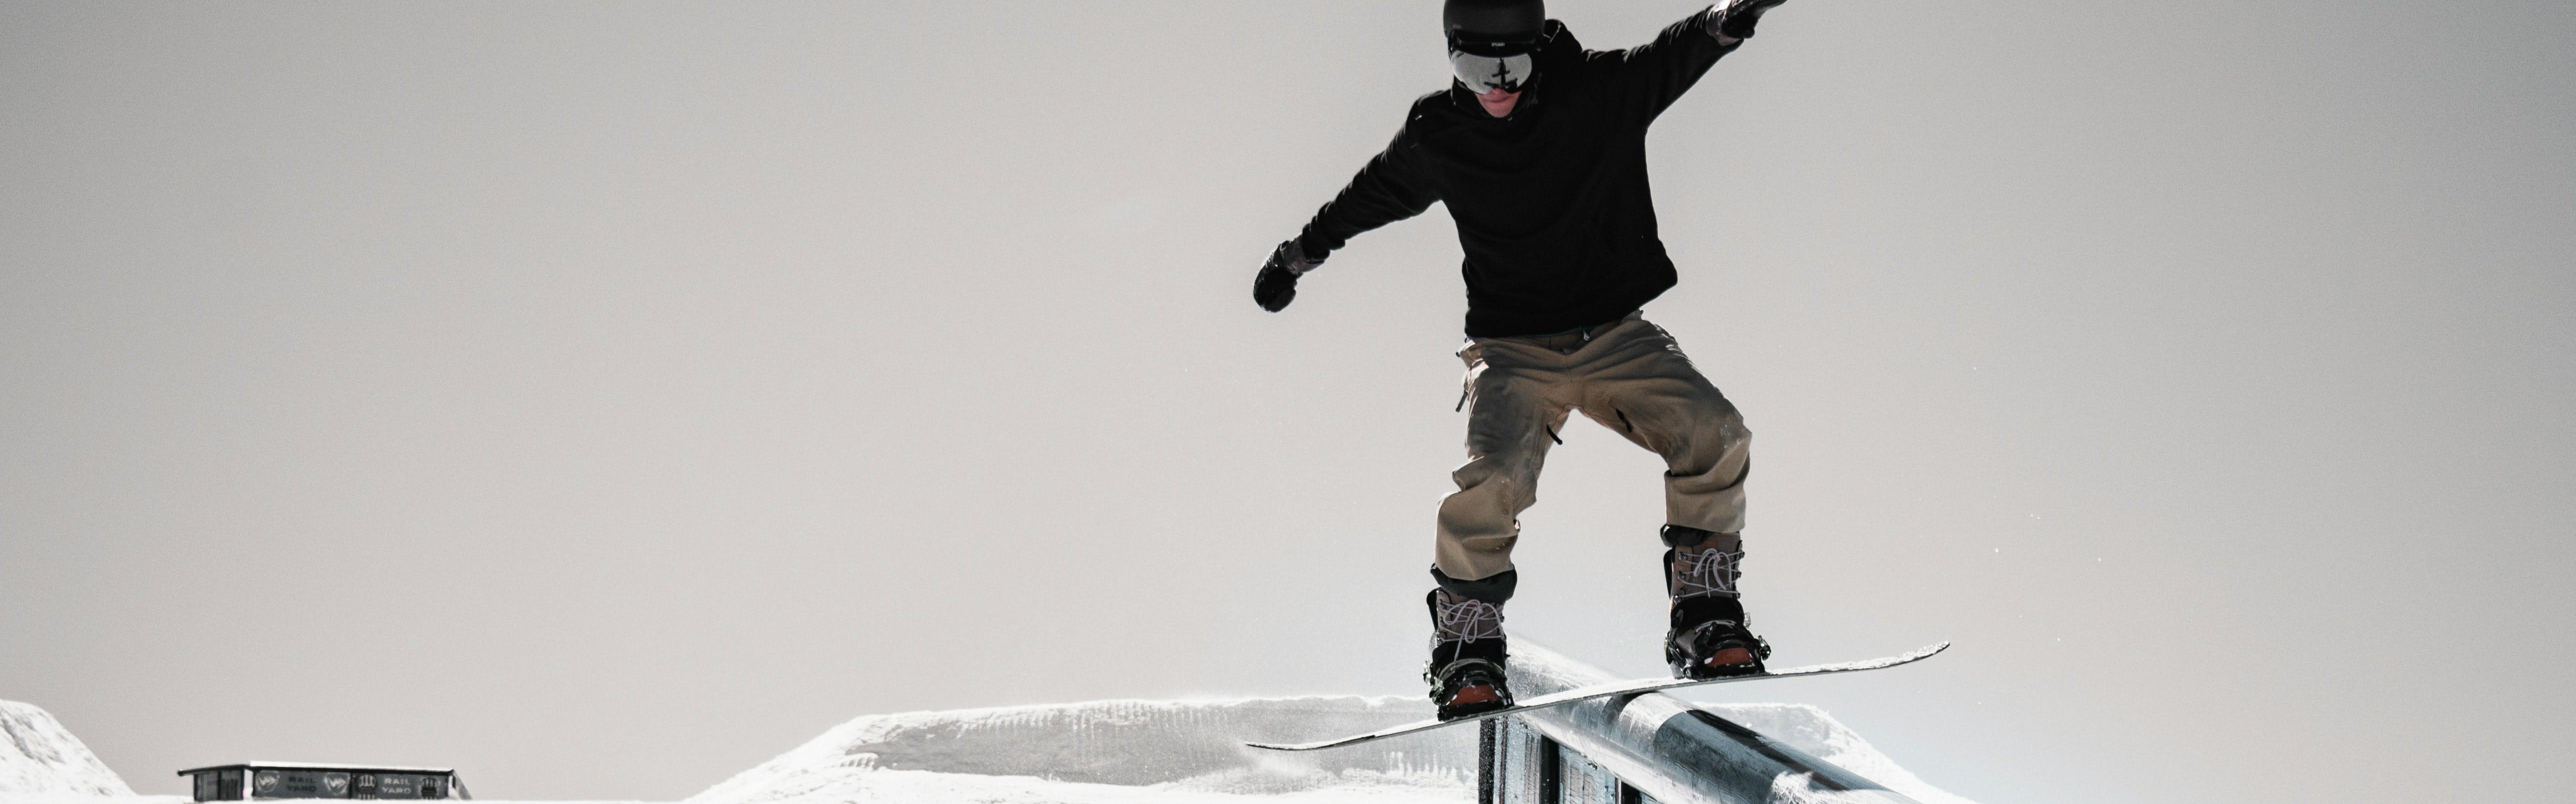 RIDE snowboard  Pants  Jumpsuits  Ride Snowboard Pants Xs  Poshmark